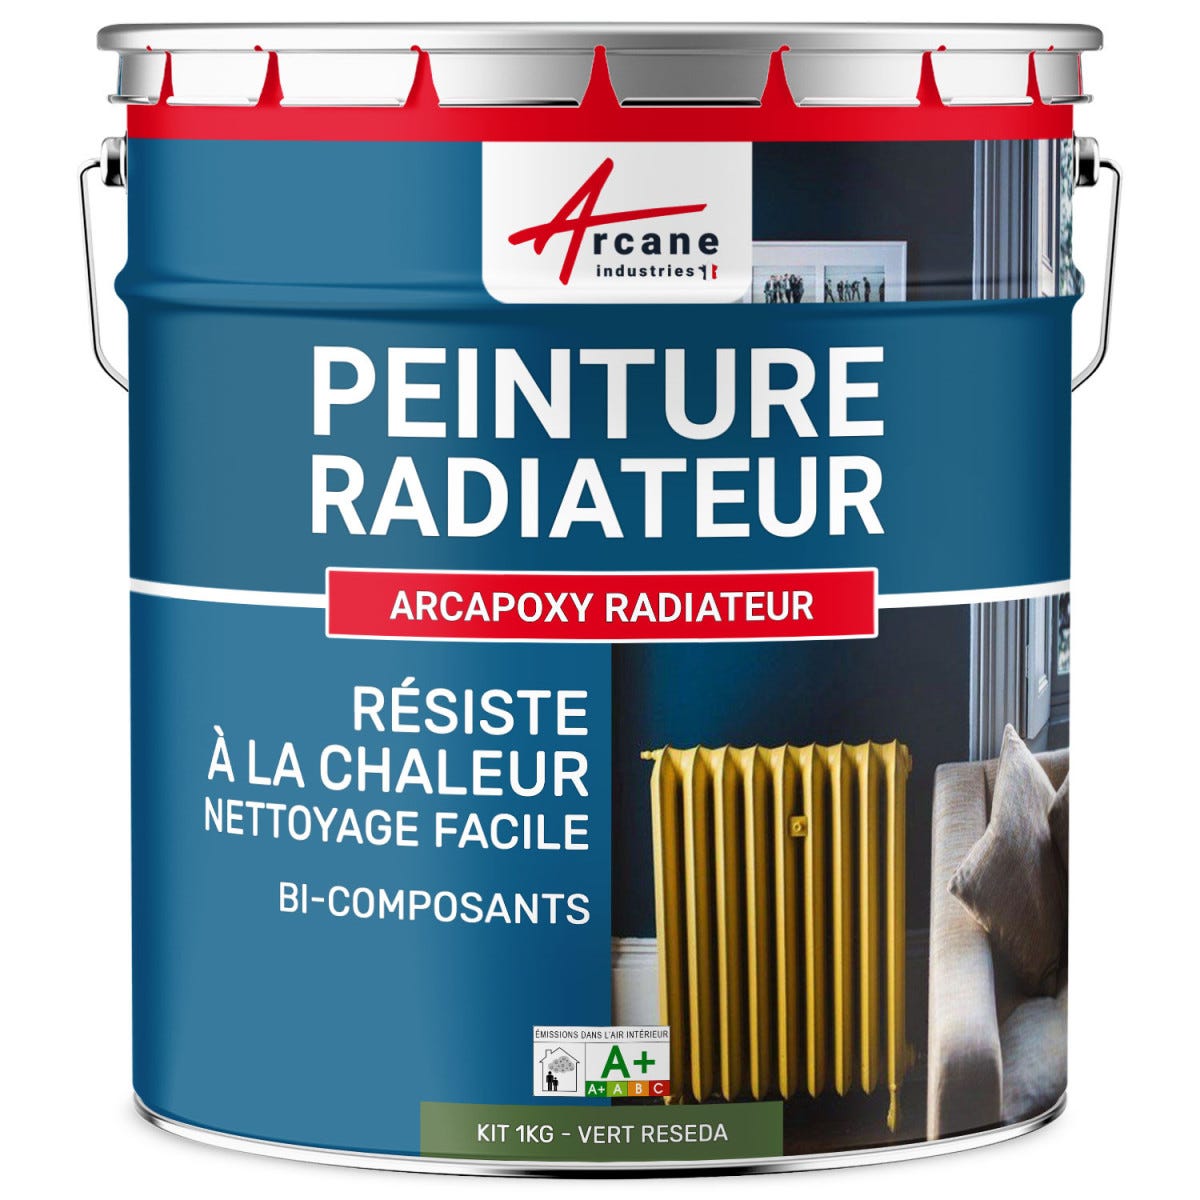 Peinture Radiateur fonte acier alu - PEINTURE RADIATEUR - 1 kg (jusqu'à 5 m² en 2 couches) - Vert Reseda - RAL 6011 - ARCANE INDUSTRIES 5